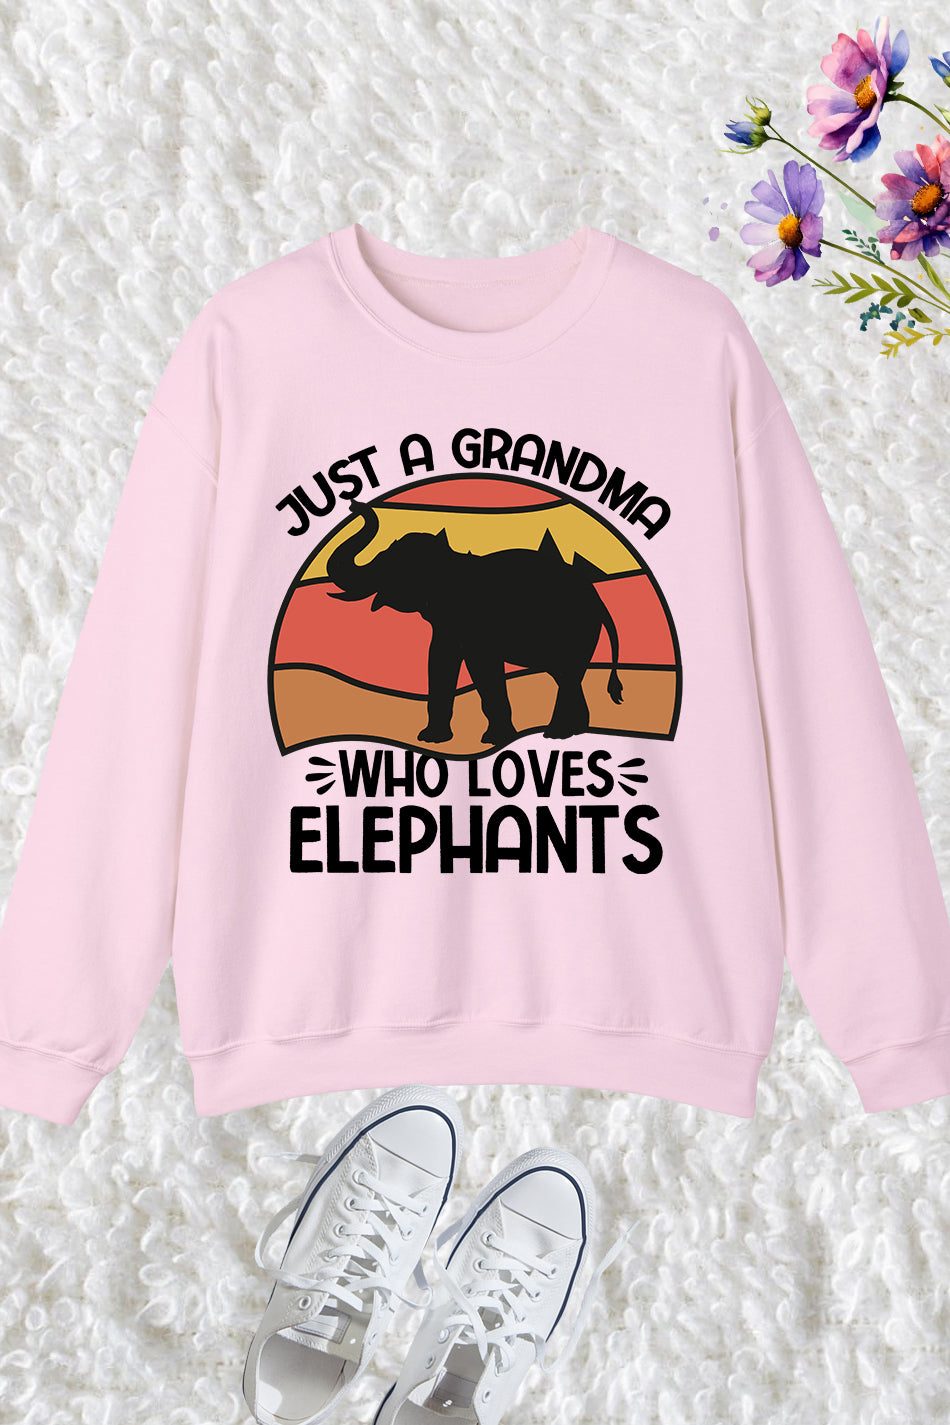 Just a Grandma Who Loves Elephants Sweatshirt